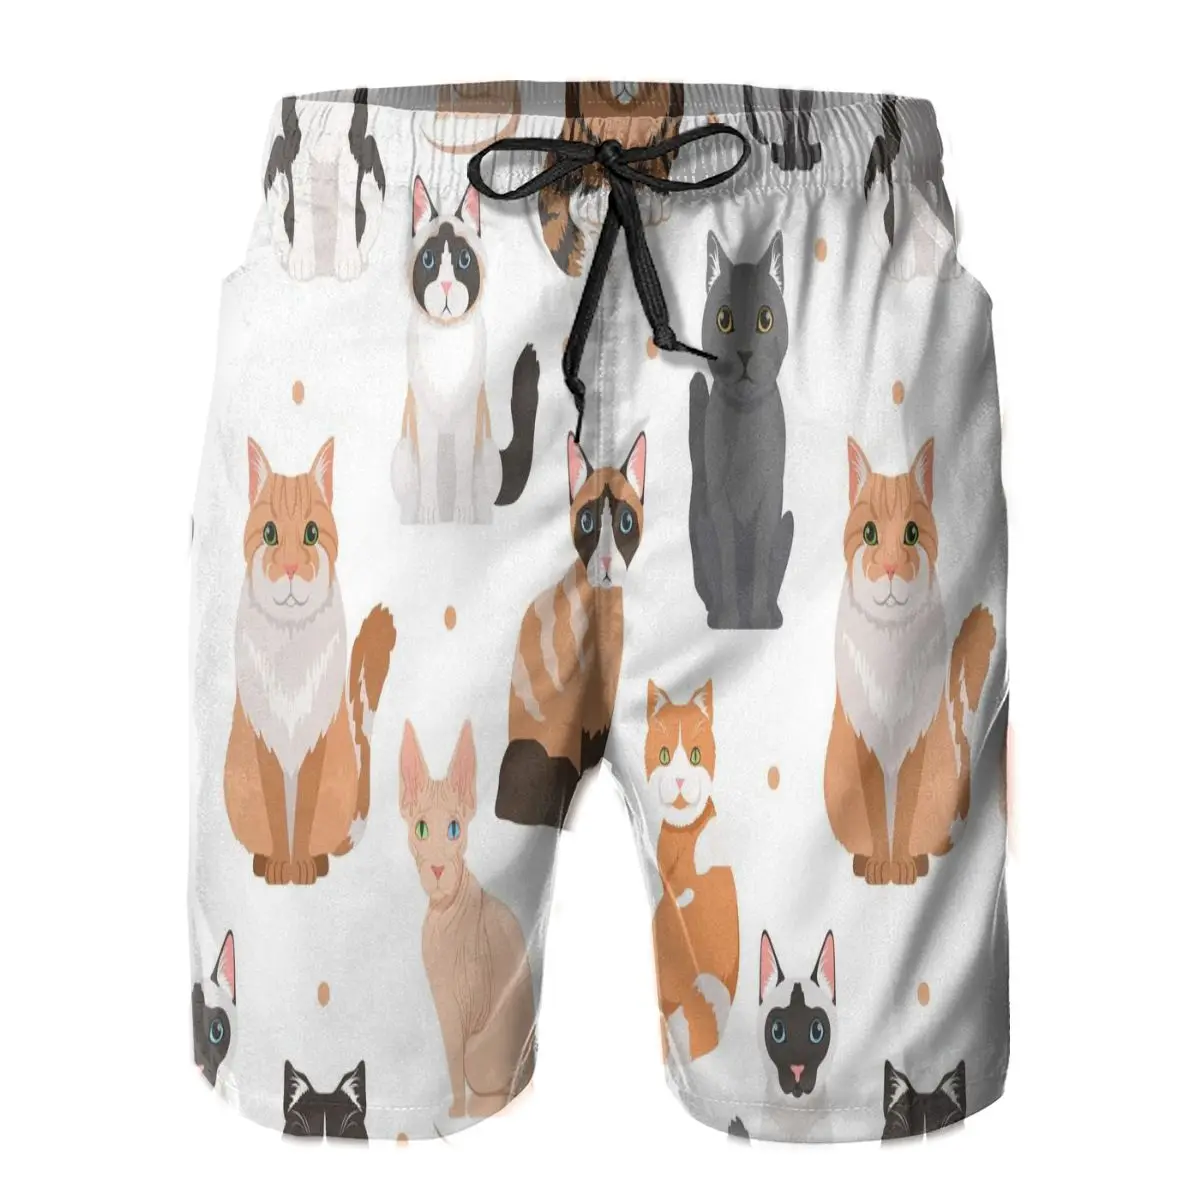 

Funny Cat Men's beach shorts Quick dry travel swimsuit swimming trunks surf pants slacks mountain sports pants gym pants shorts